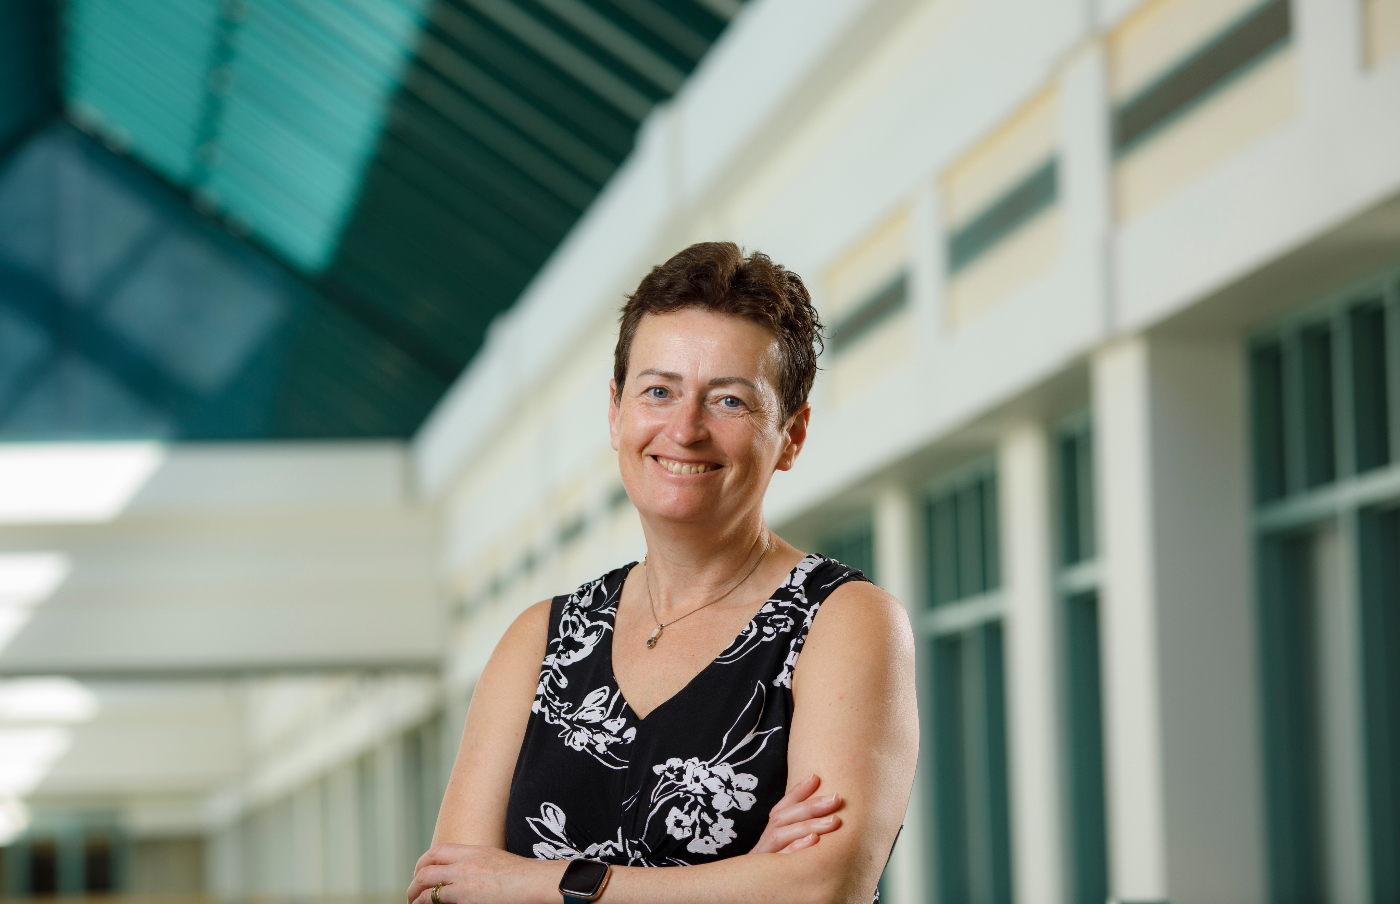 Dartmouth Health radiologist chosen as recipient of national educator award